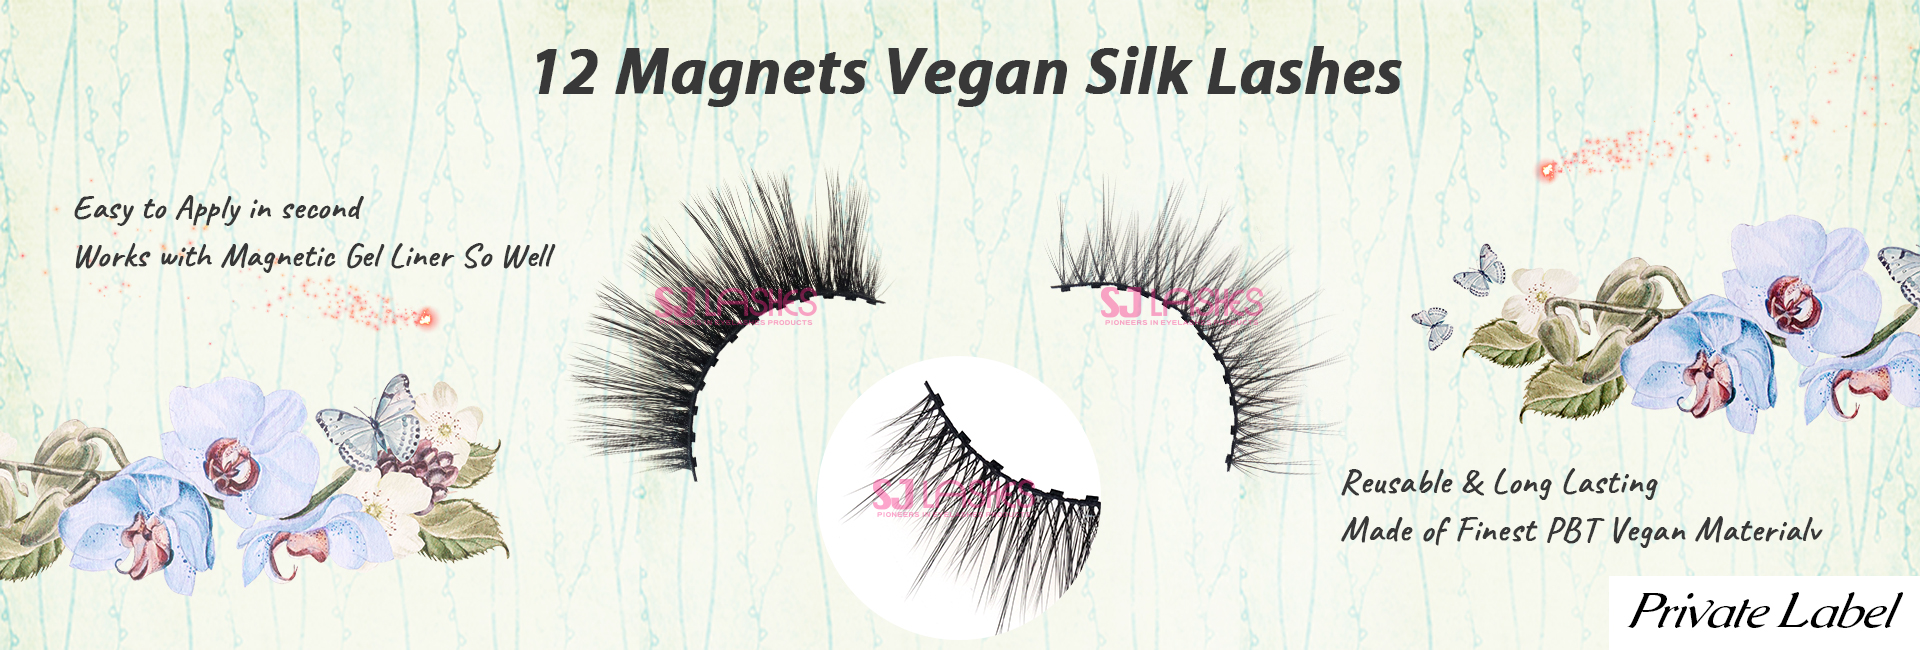 12 Magnets Vegan Silk Lashes